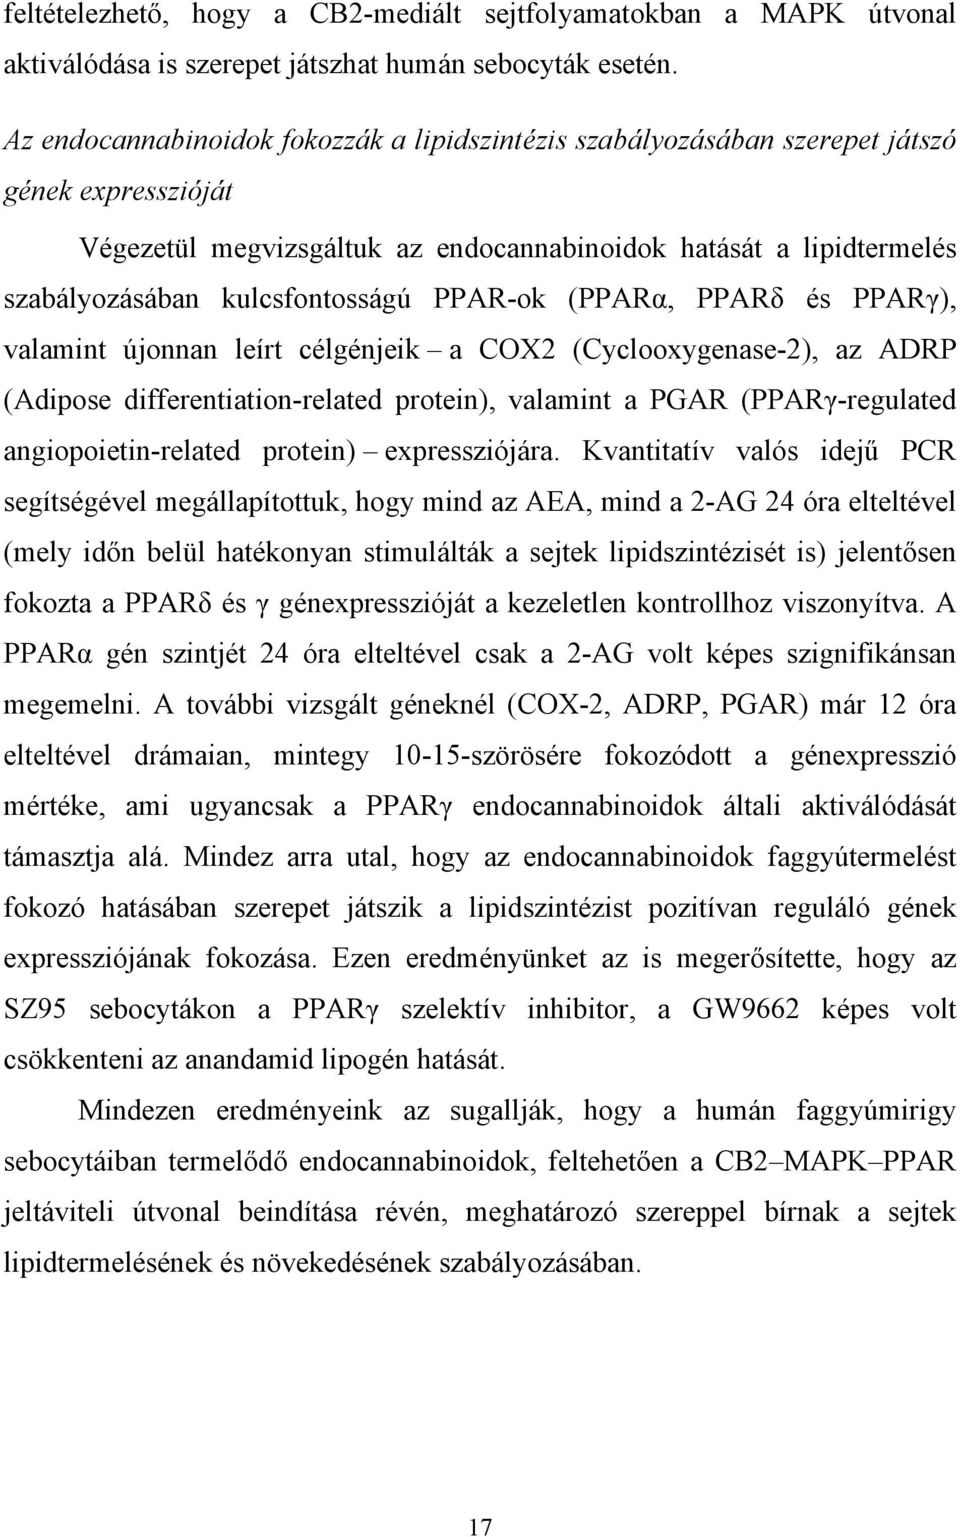 PPAR-ok (PPARα, PPARδ és PPARγ), valamint újonnan leírt célgénjeik a COX2 (Cyclooxygenase-2), az ADRP (Adipose differentiation-related protein), valamint a PGAR (PPARγ-regulated angiopoietin-related